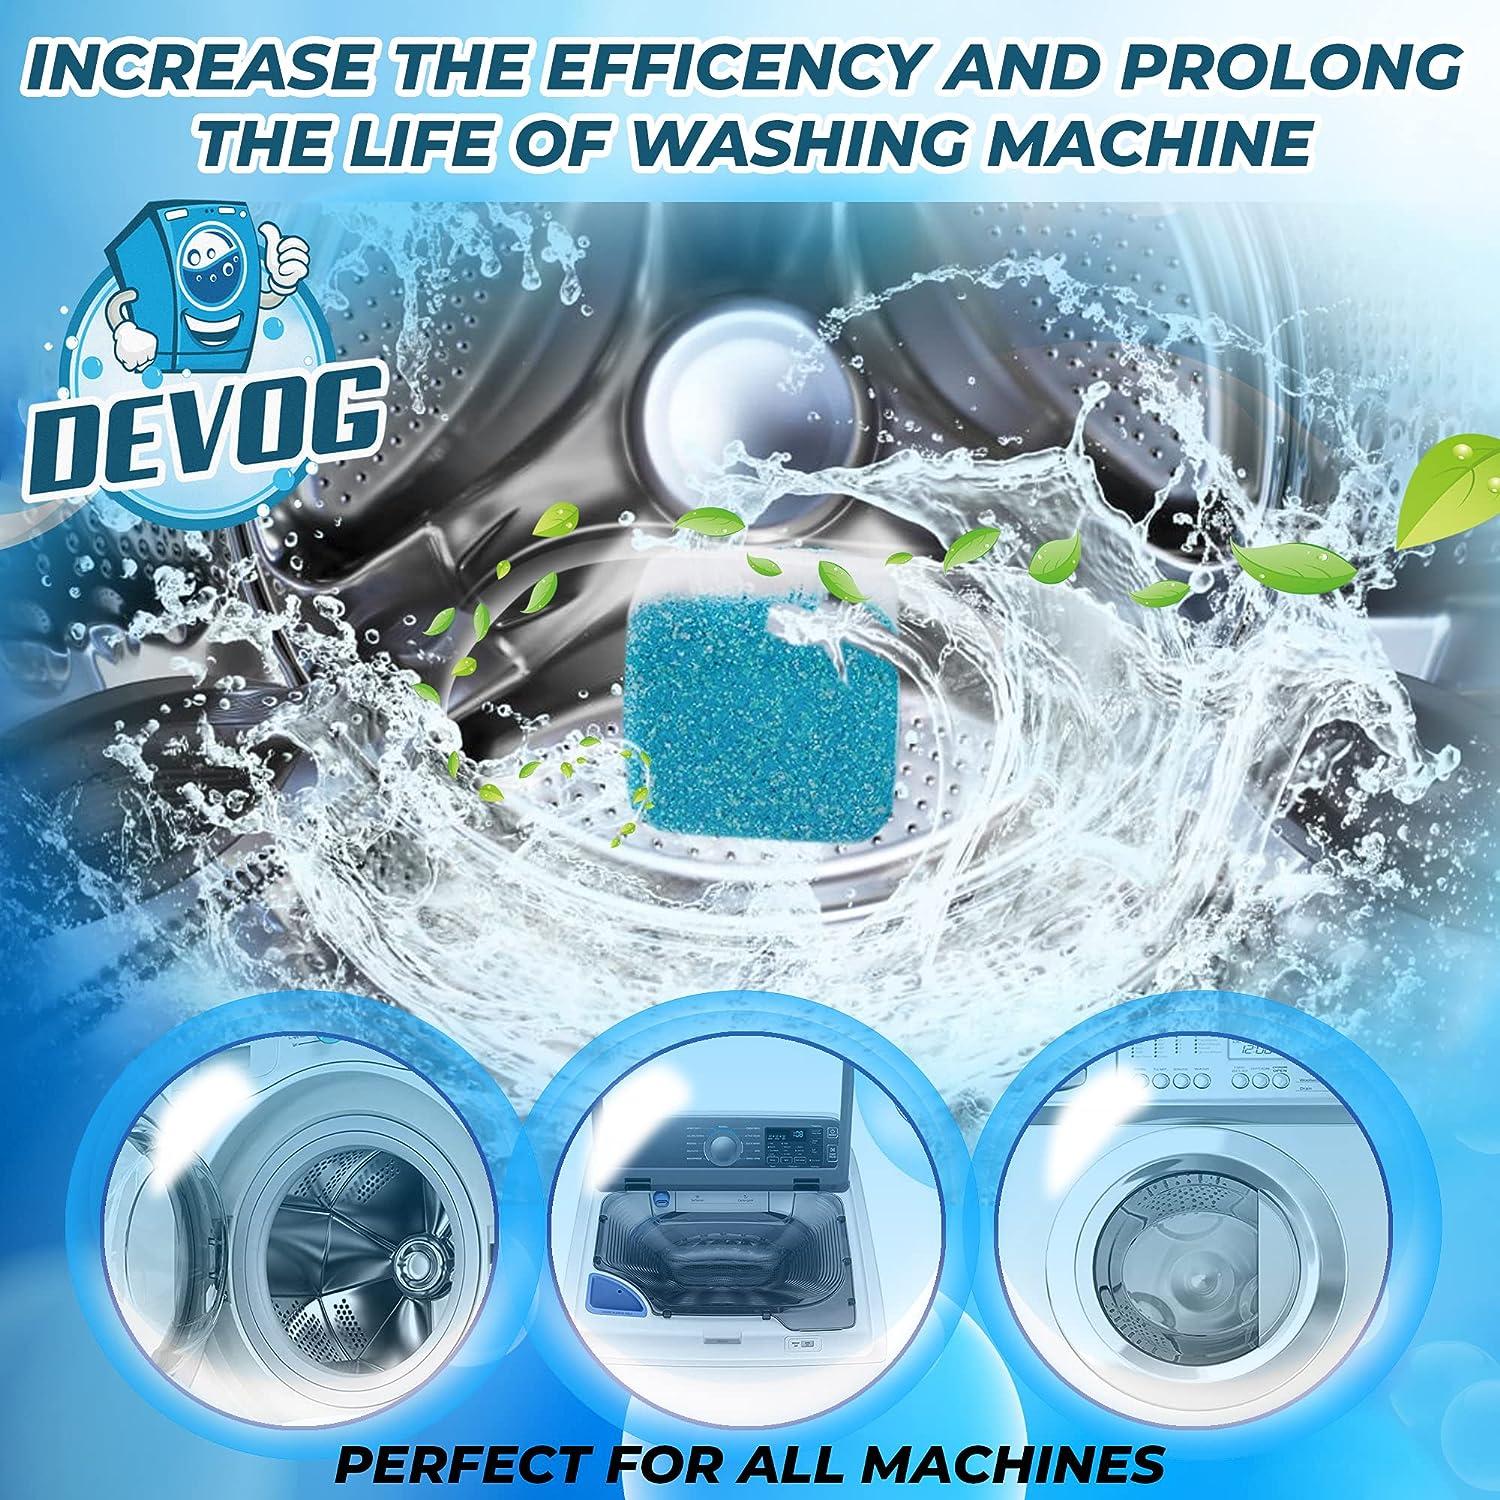 DEVOG Washing Machine Cleaner, 24 pcs Washer Machine Cleaner with